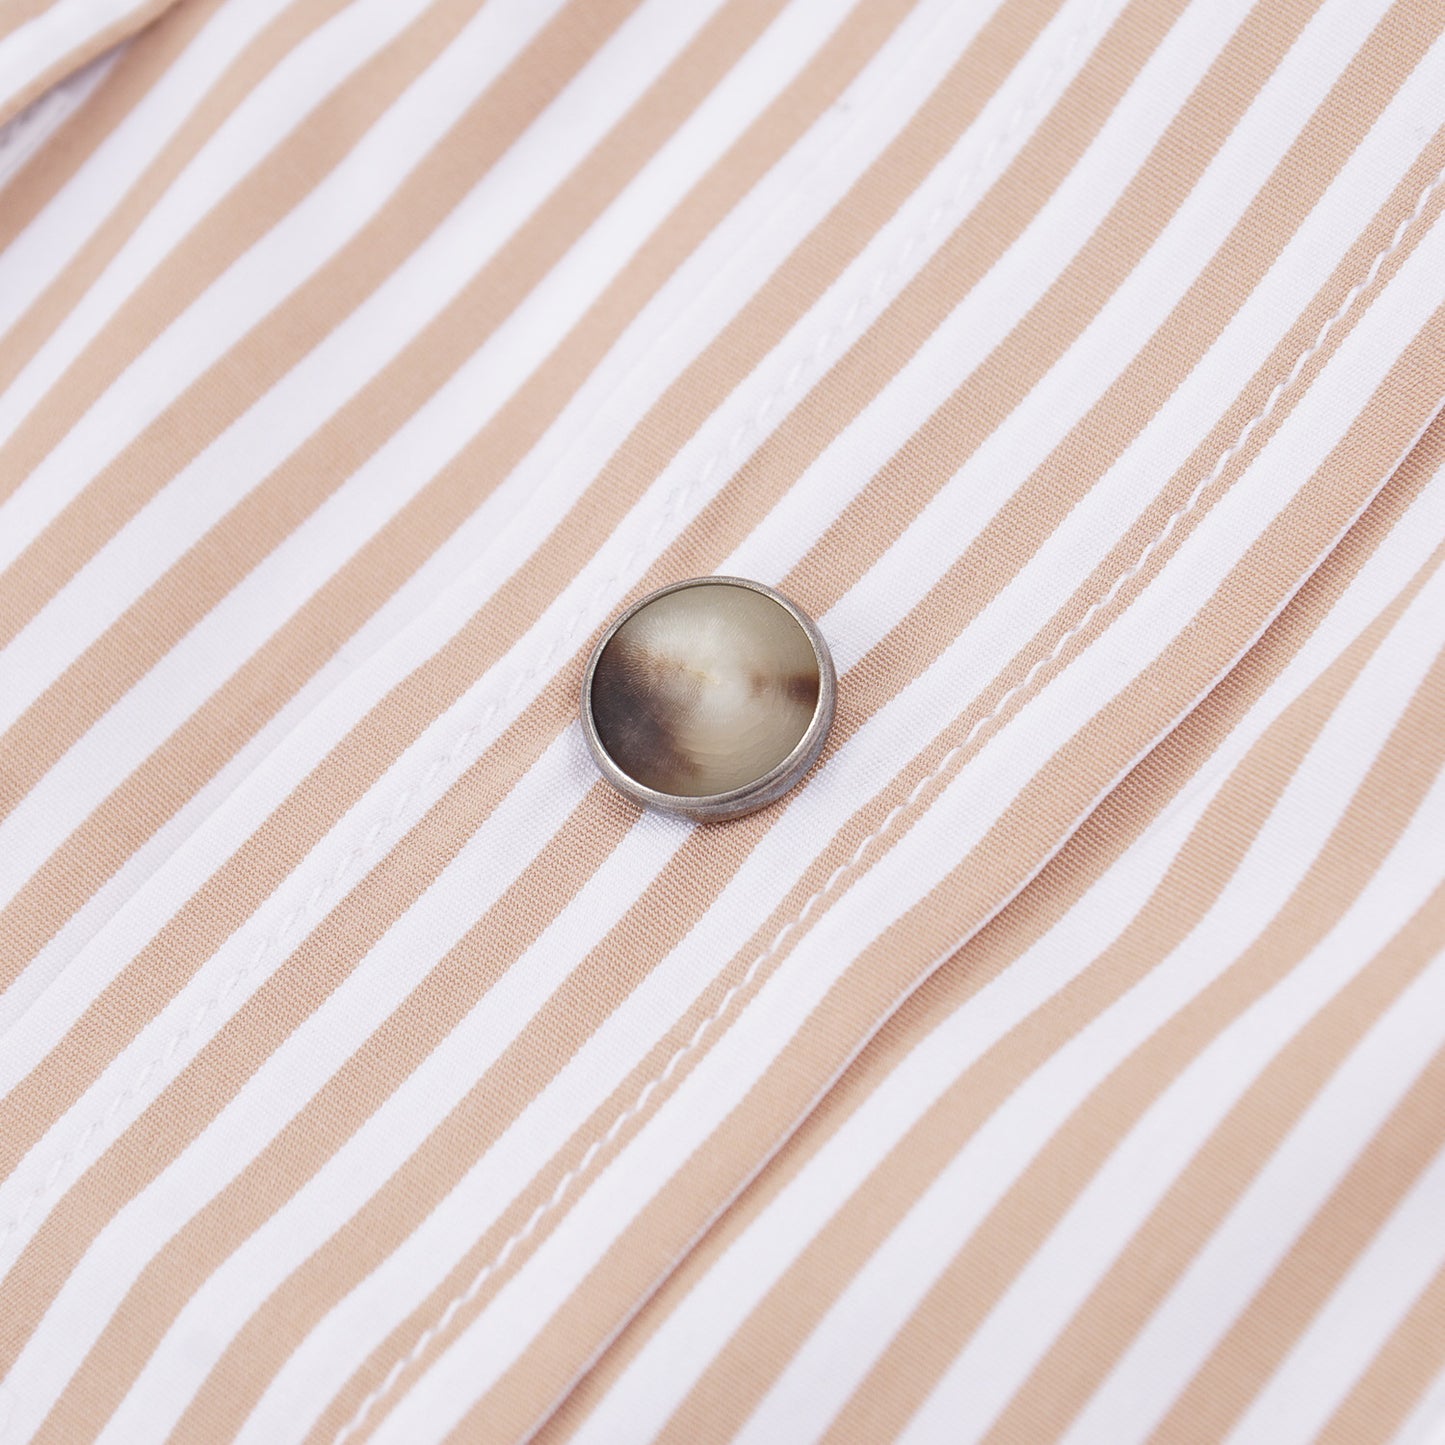 Brunello Cucinelli Cotton Western Shirt - Top Shelf Apparel